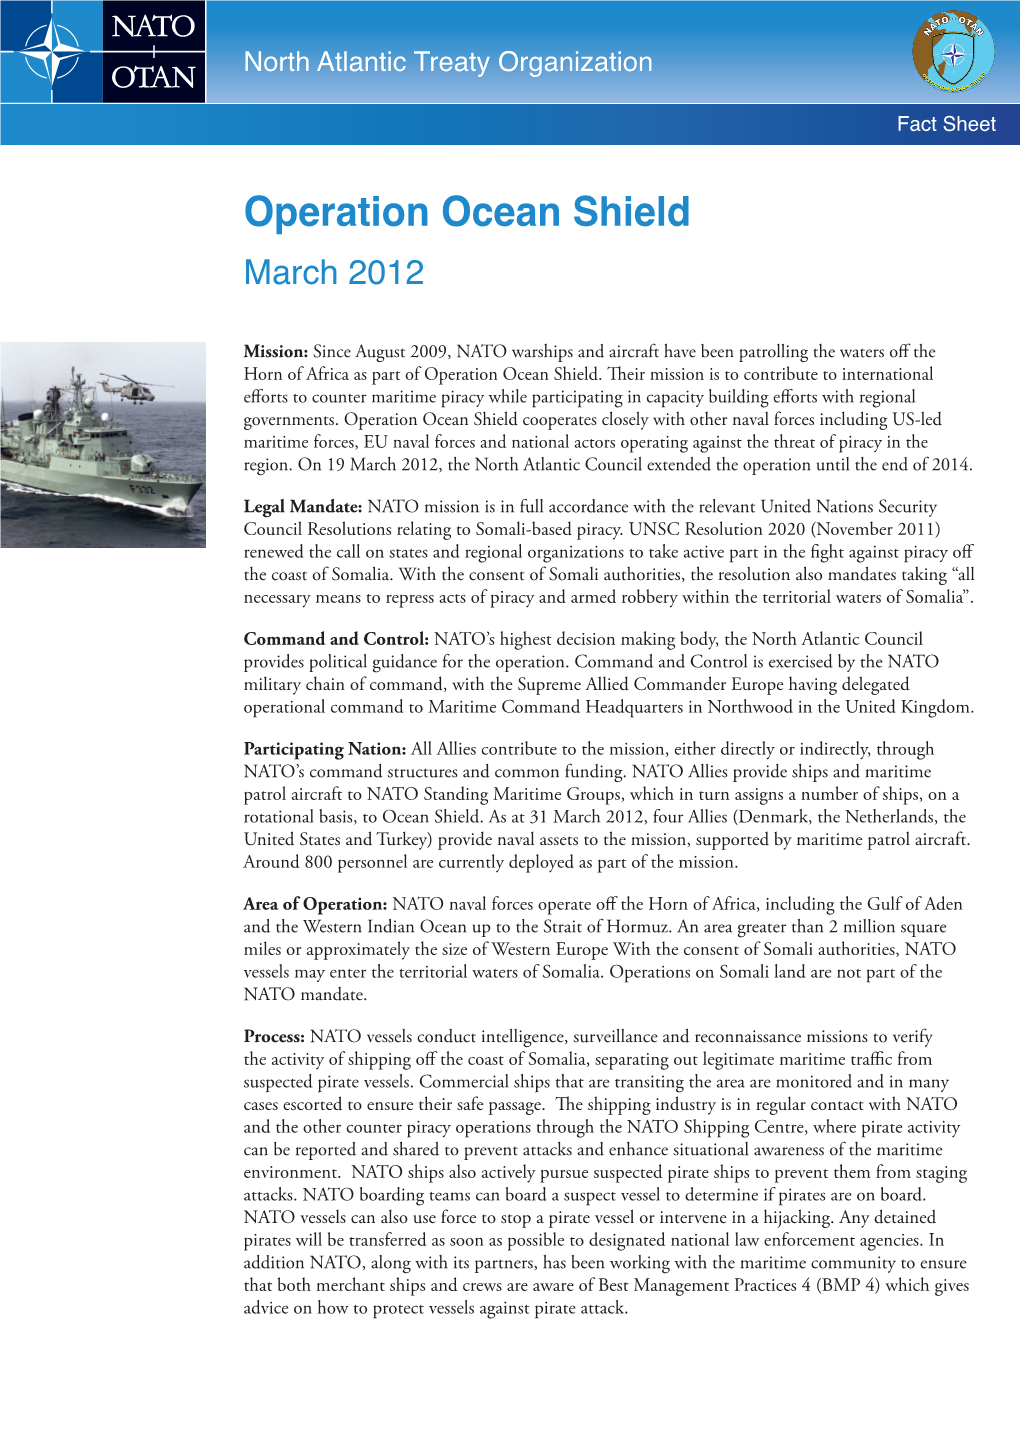 Factsheet on Operation Ocean Shield